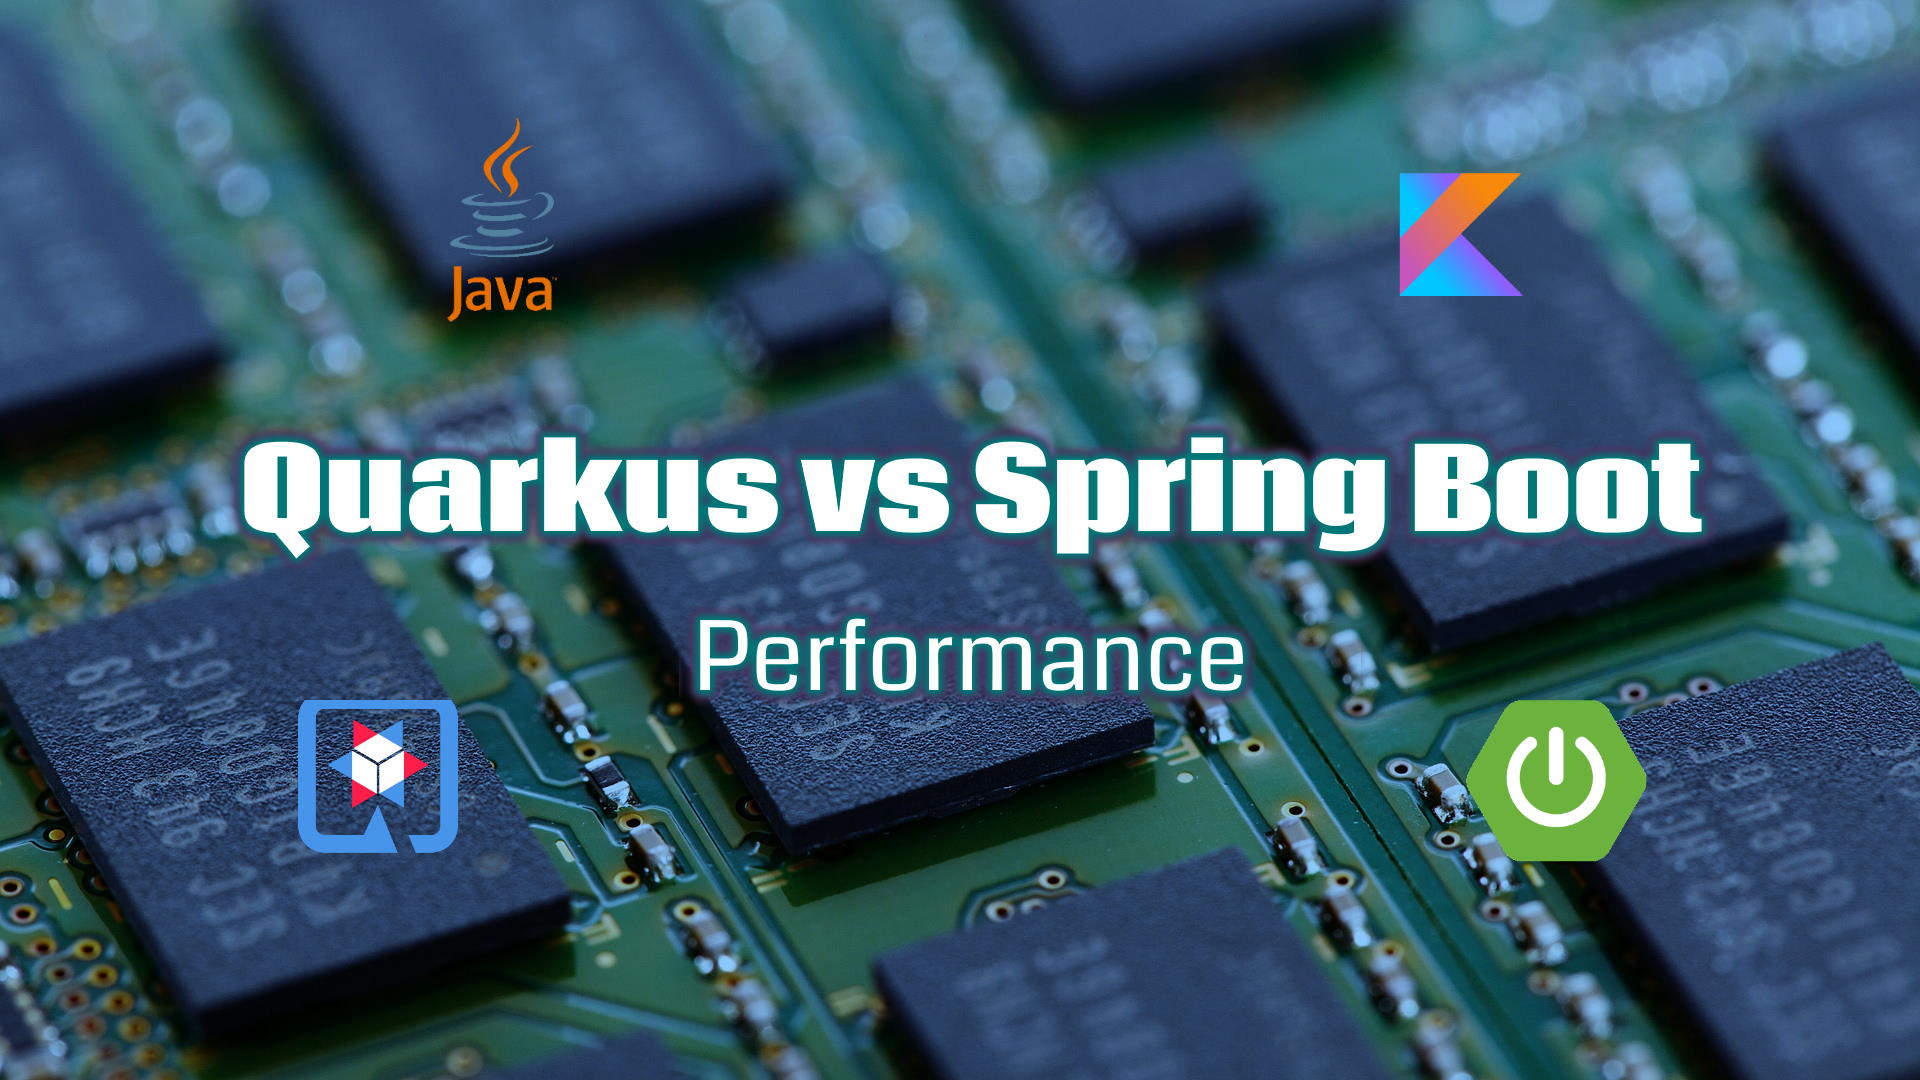 Quarkus vs Spring Boot - A real world JVM Performance comparison for Kotlin and Java on JDK 14